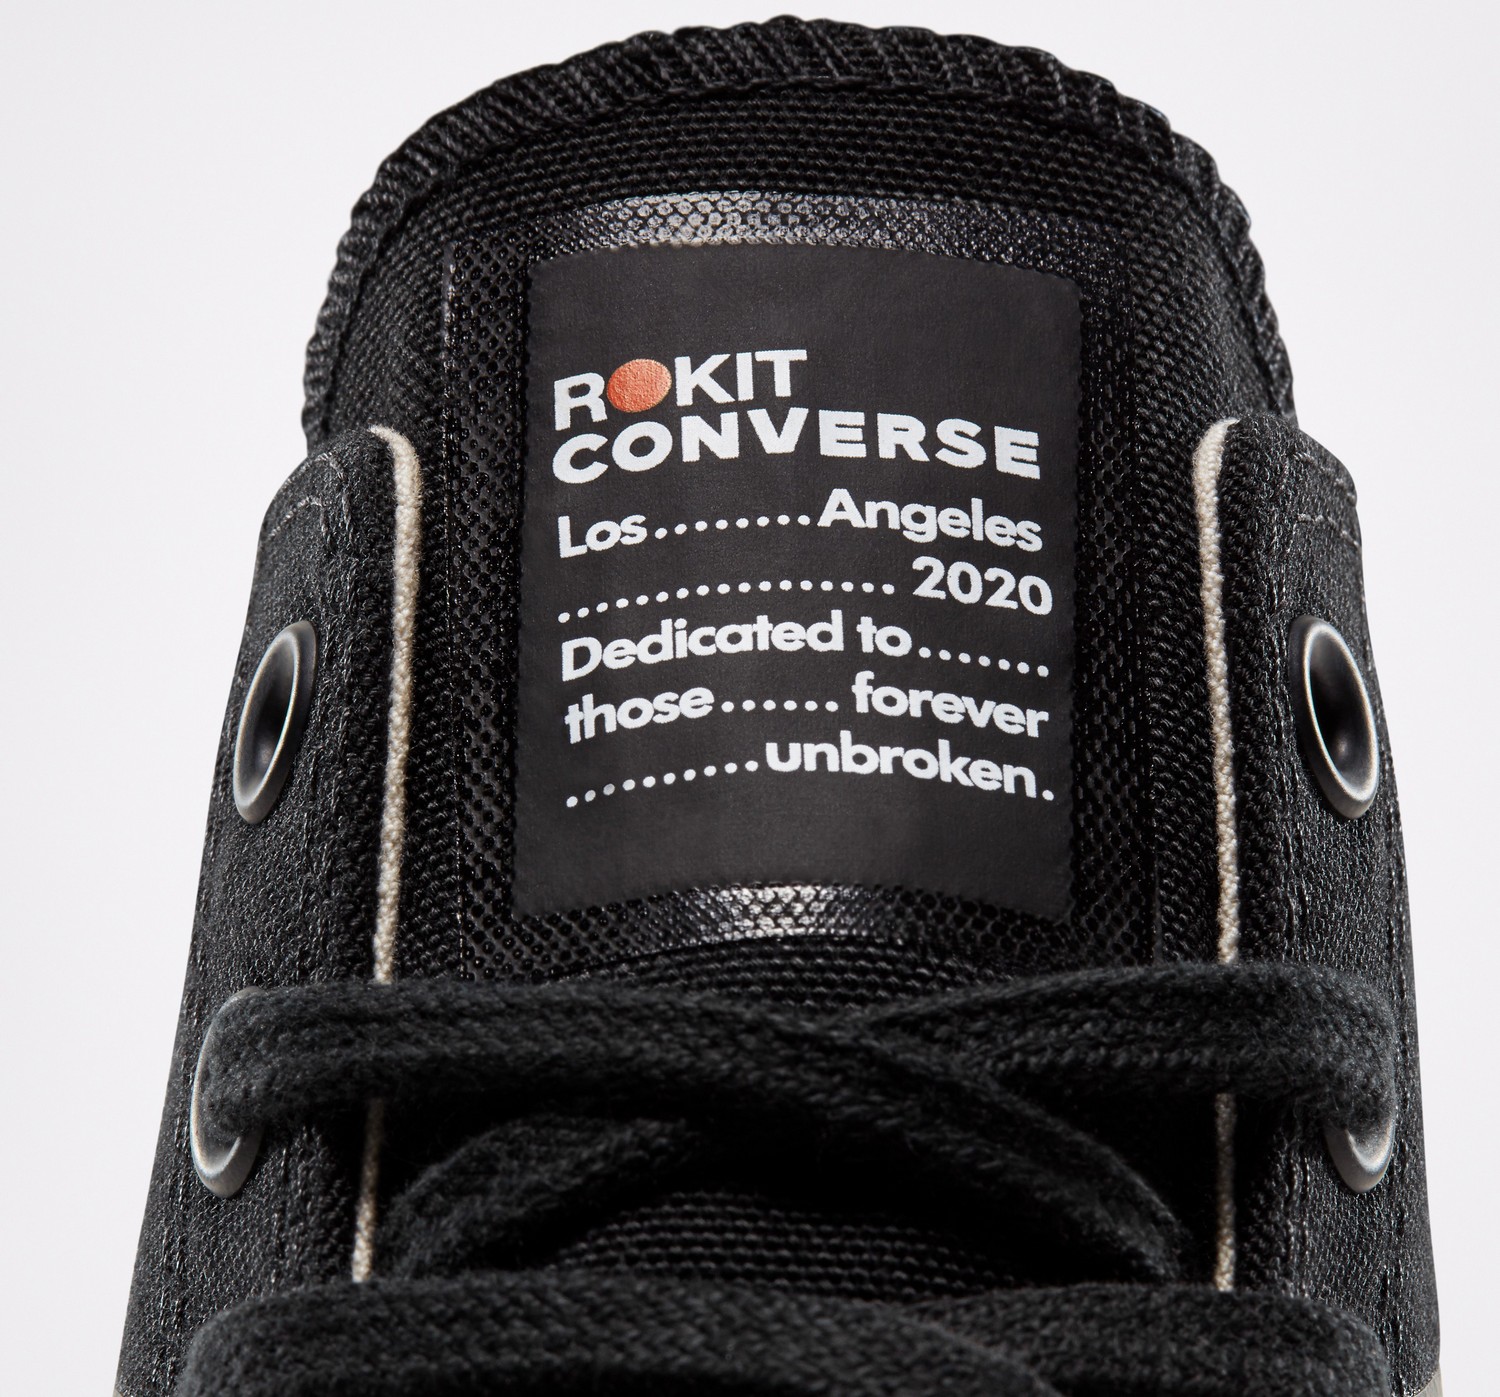 converse-rokit-chuck-70-may-2020